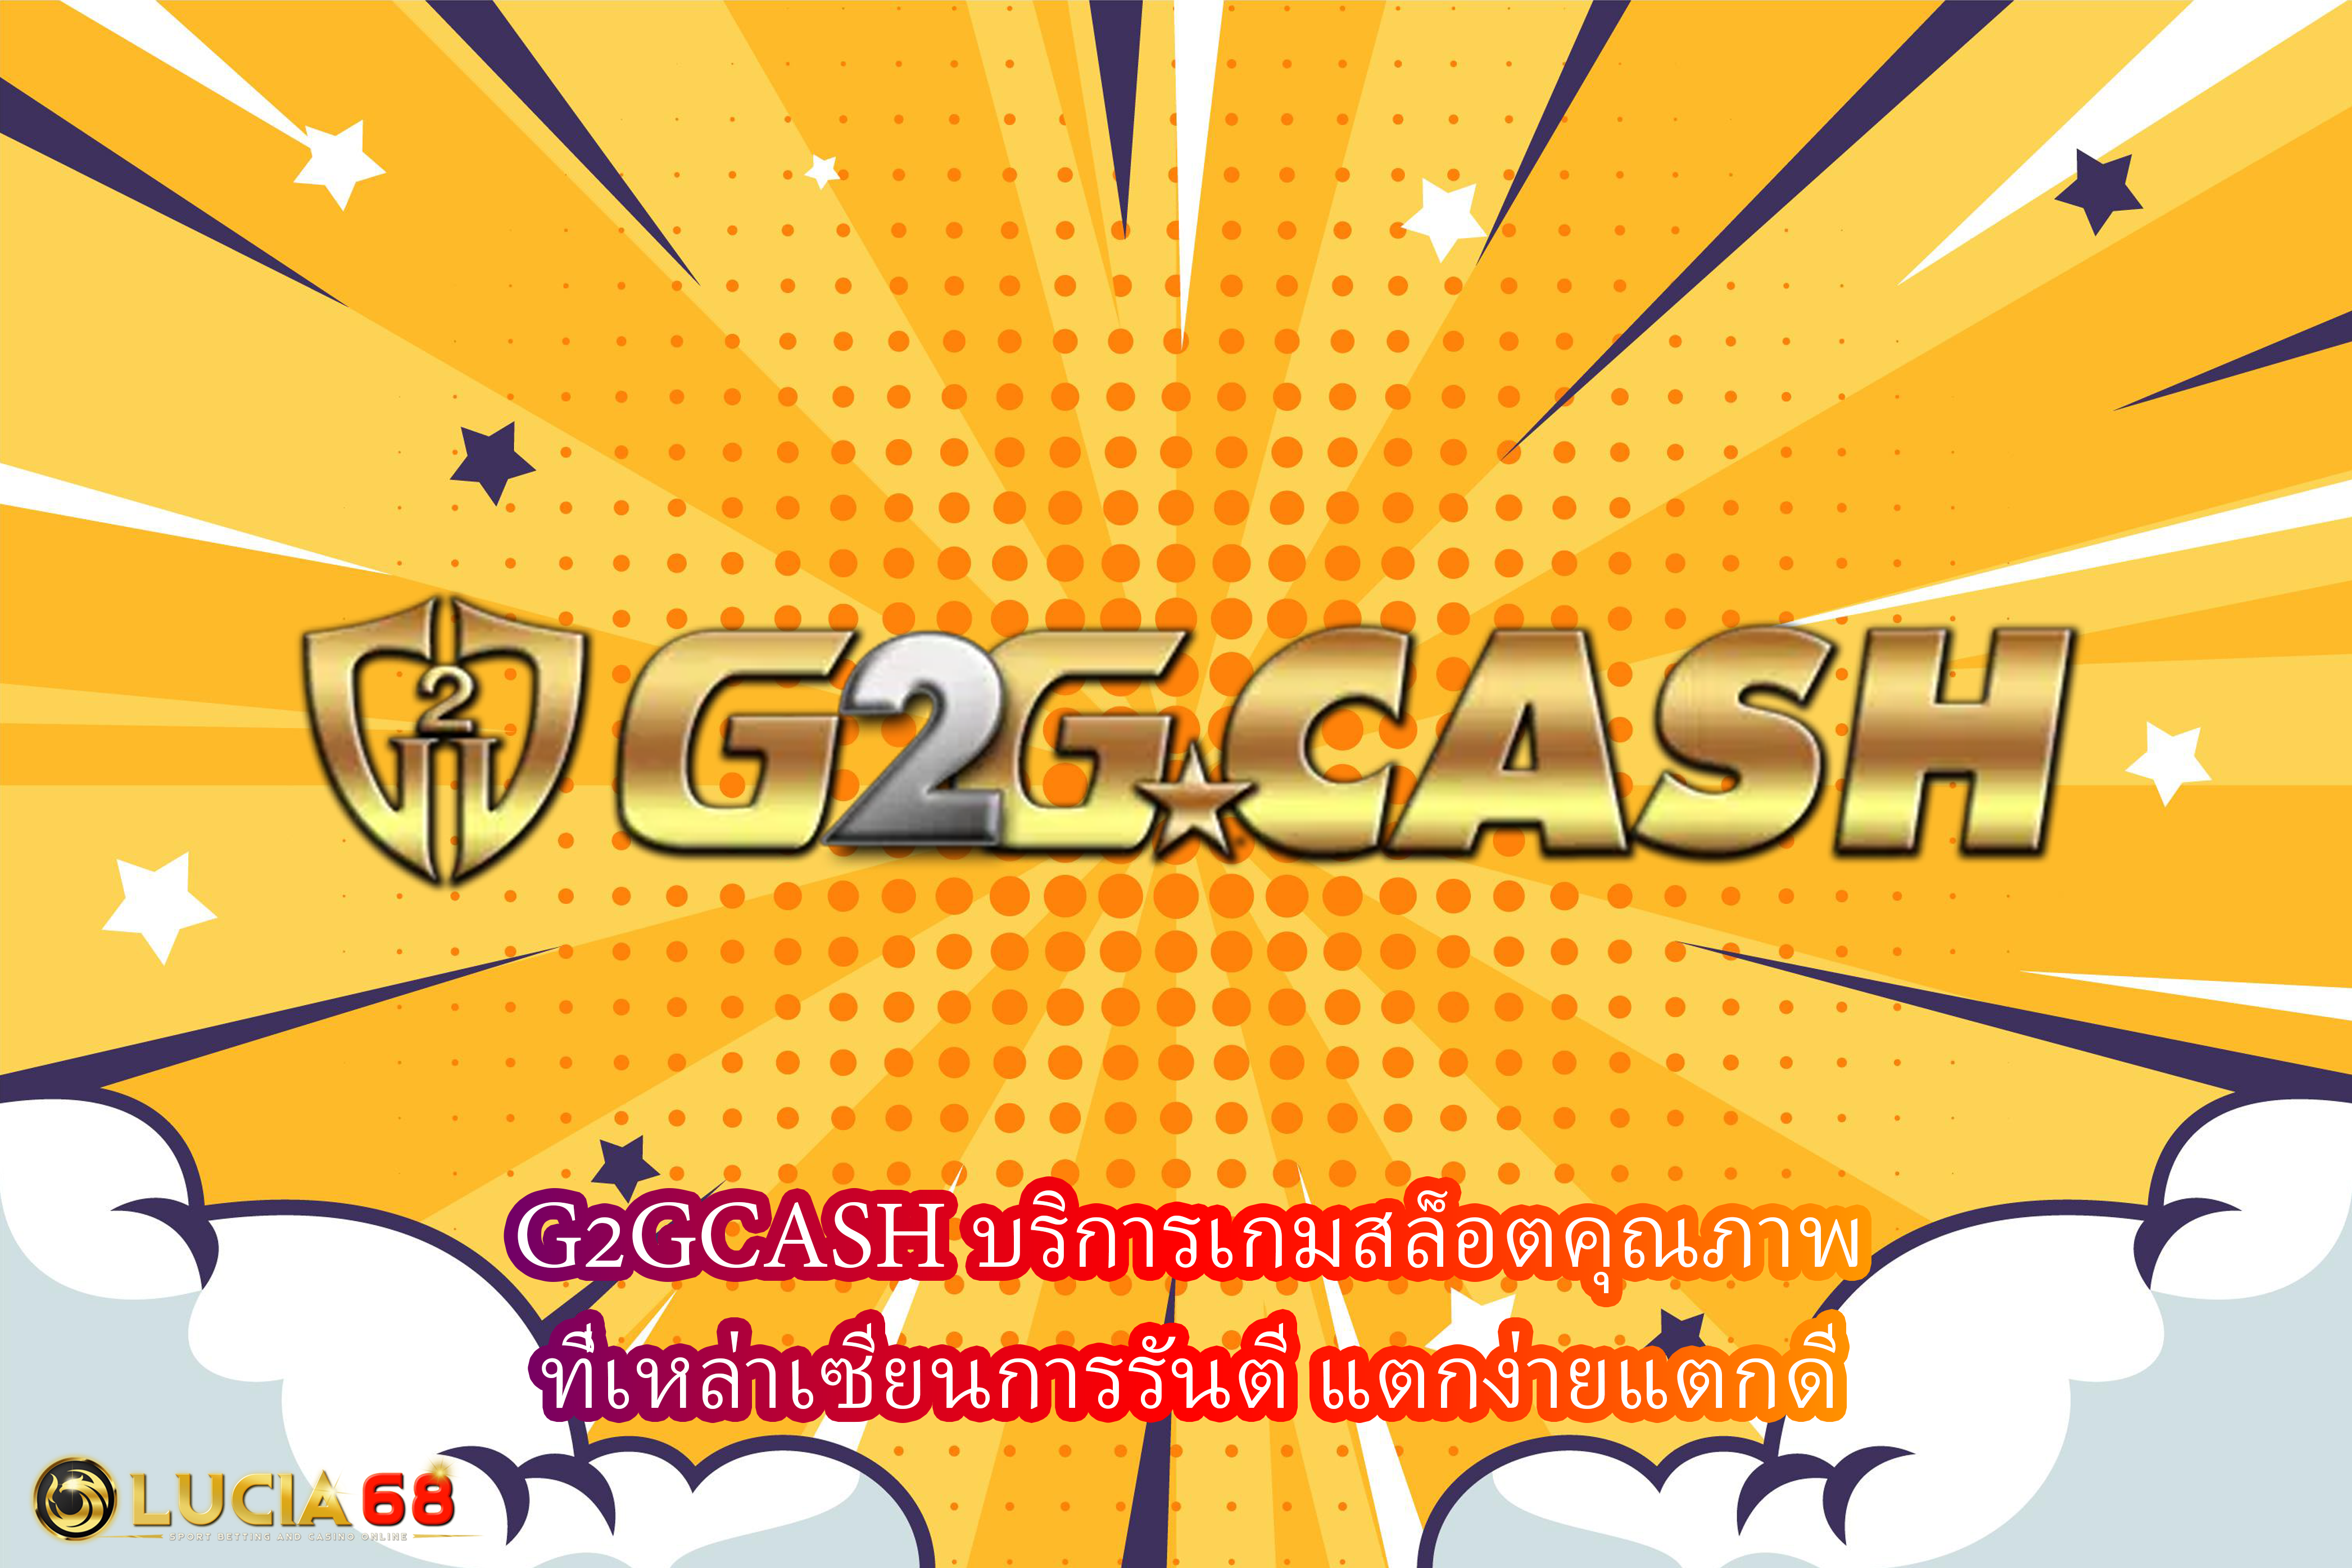 G2GCASH บริการเกมสล็อตคุณภาพ ที่เหล่าเซียนการรันตี แตกง่ายแตกดี